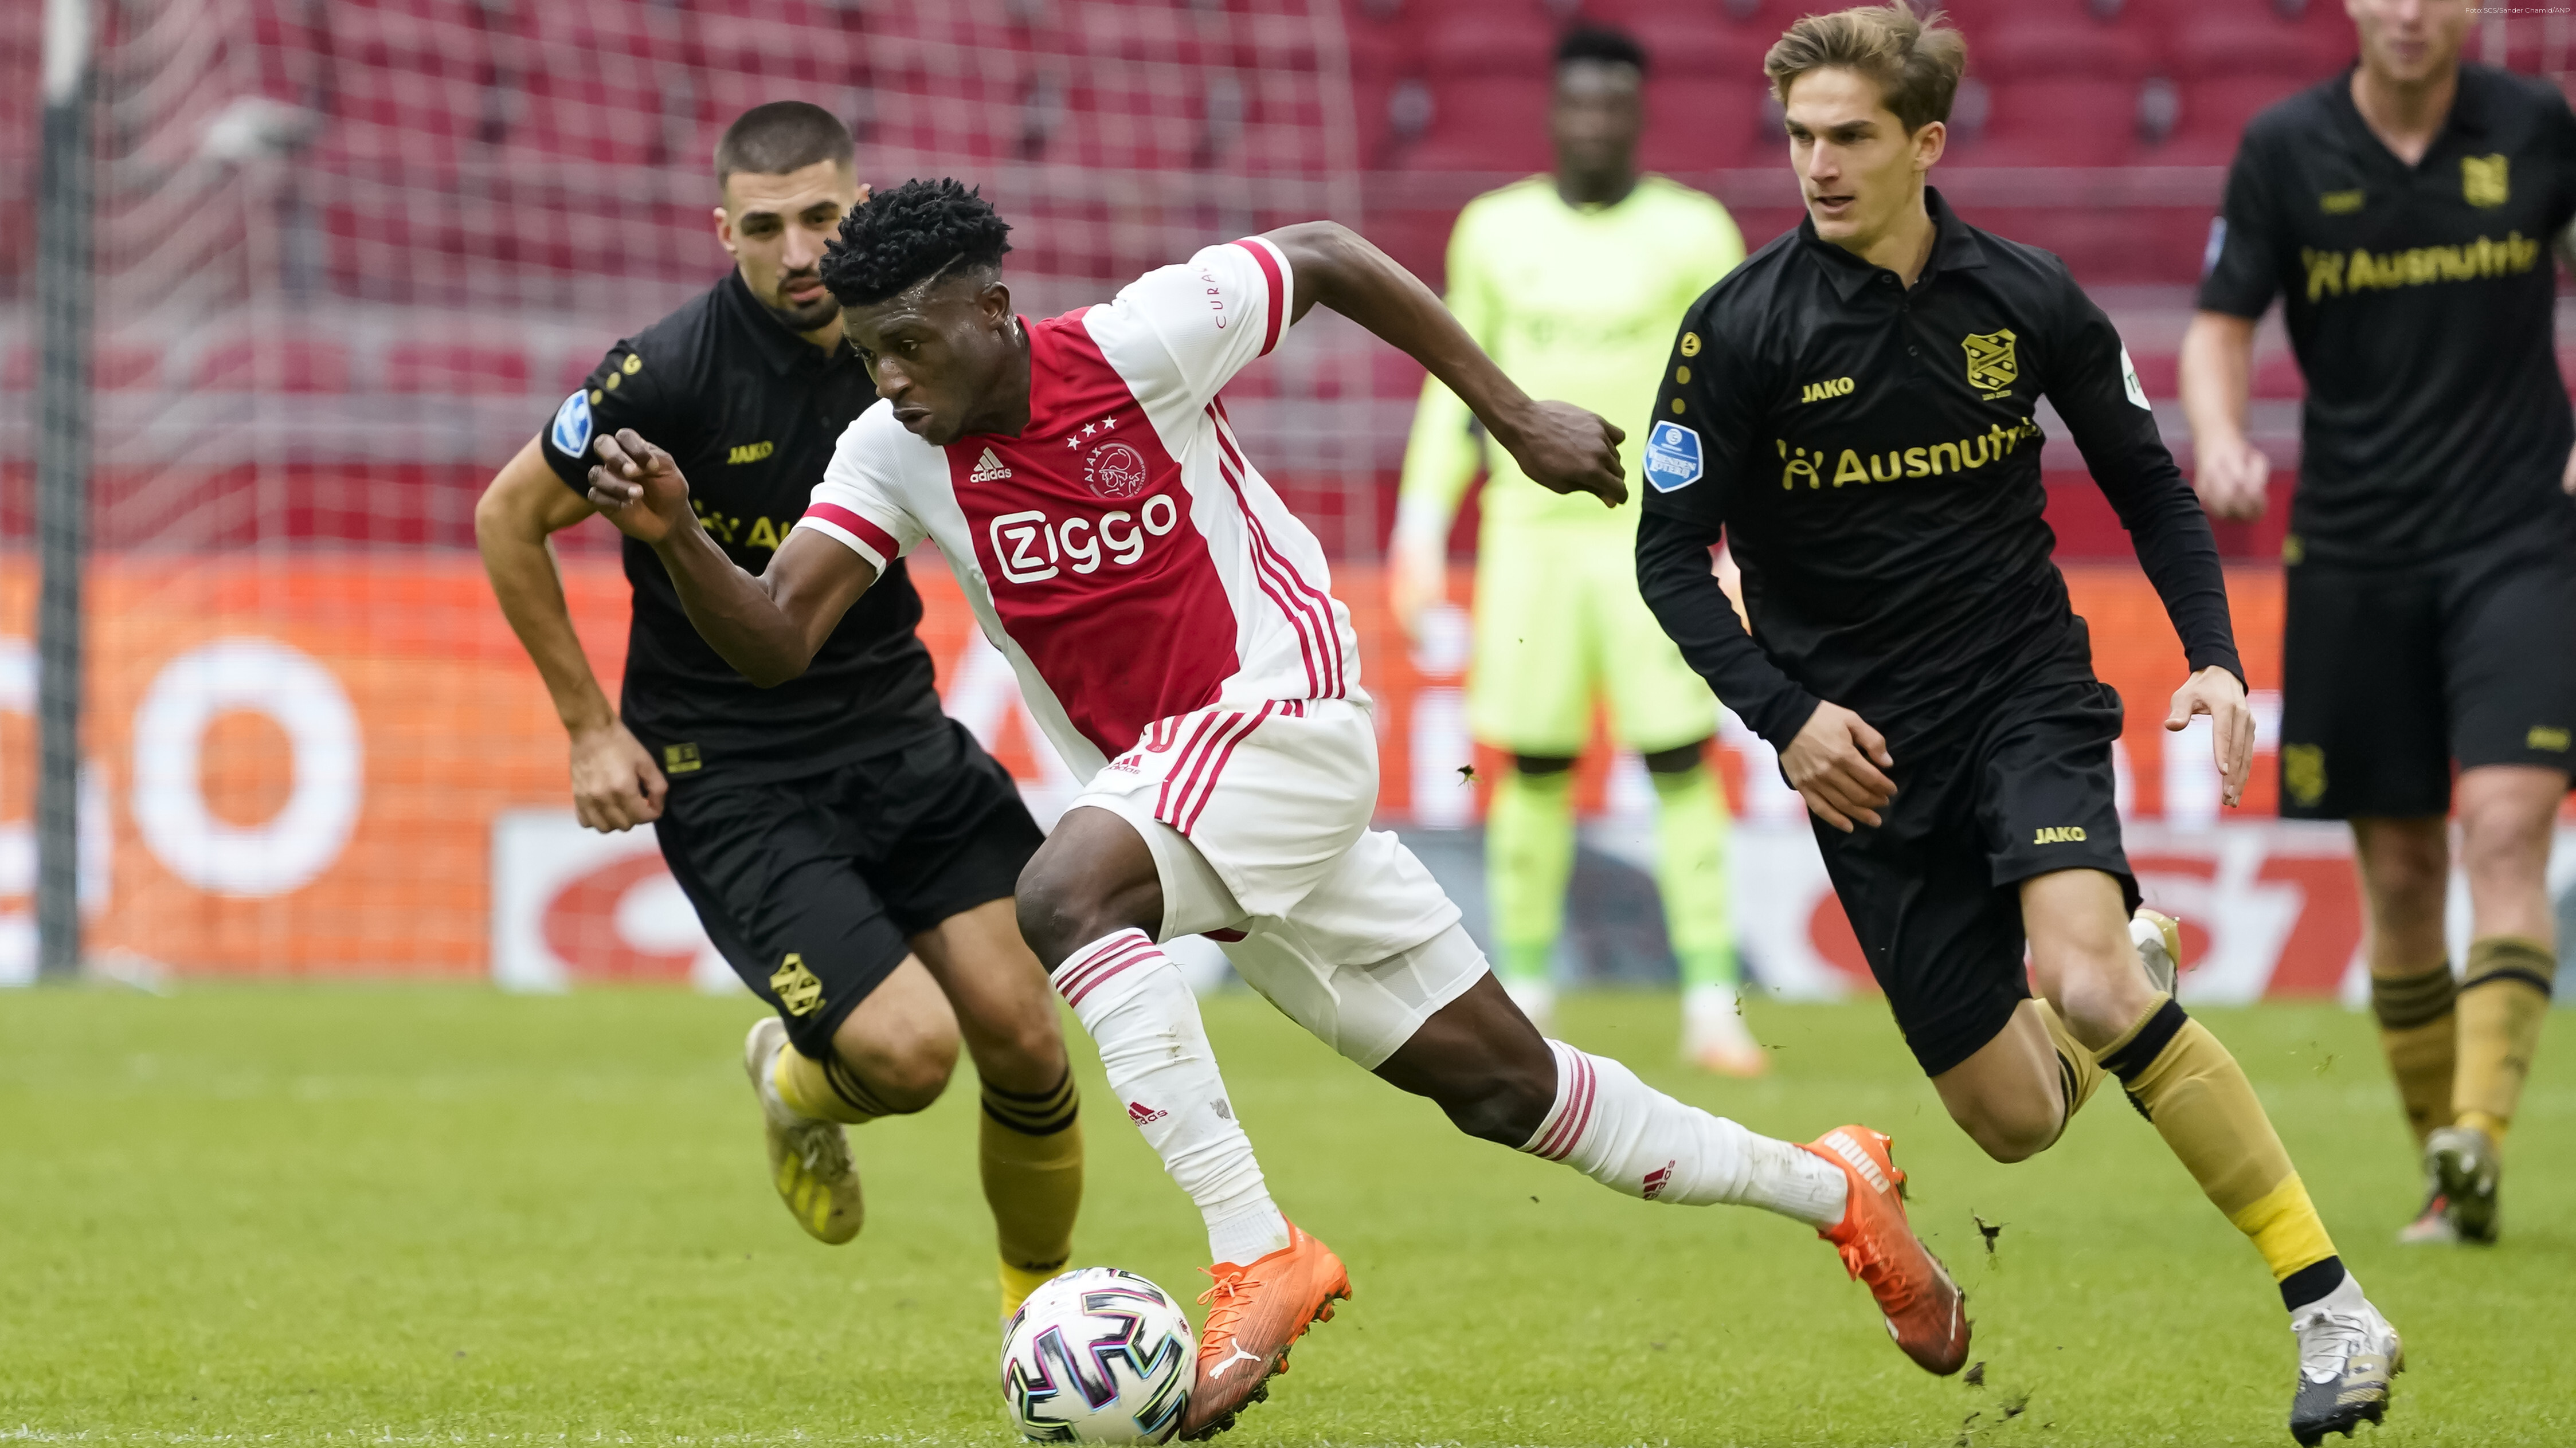 Oom of meneer heldin absorptie sc Heerenveen - Ajax live op tv (halve finale KNVB-beker)